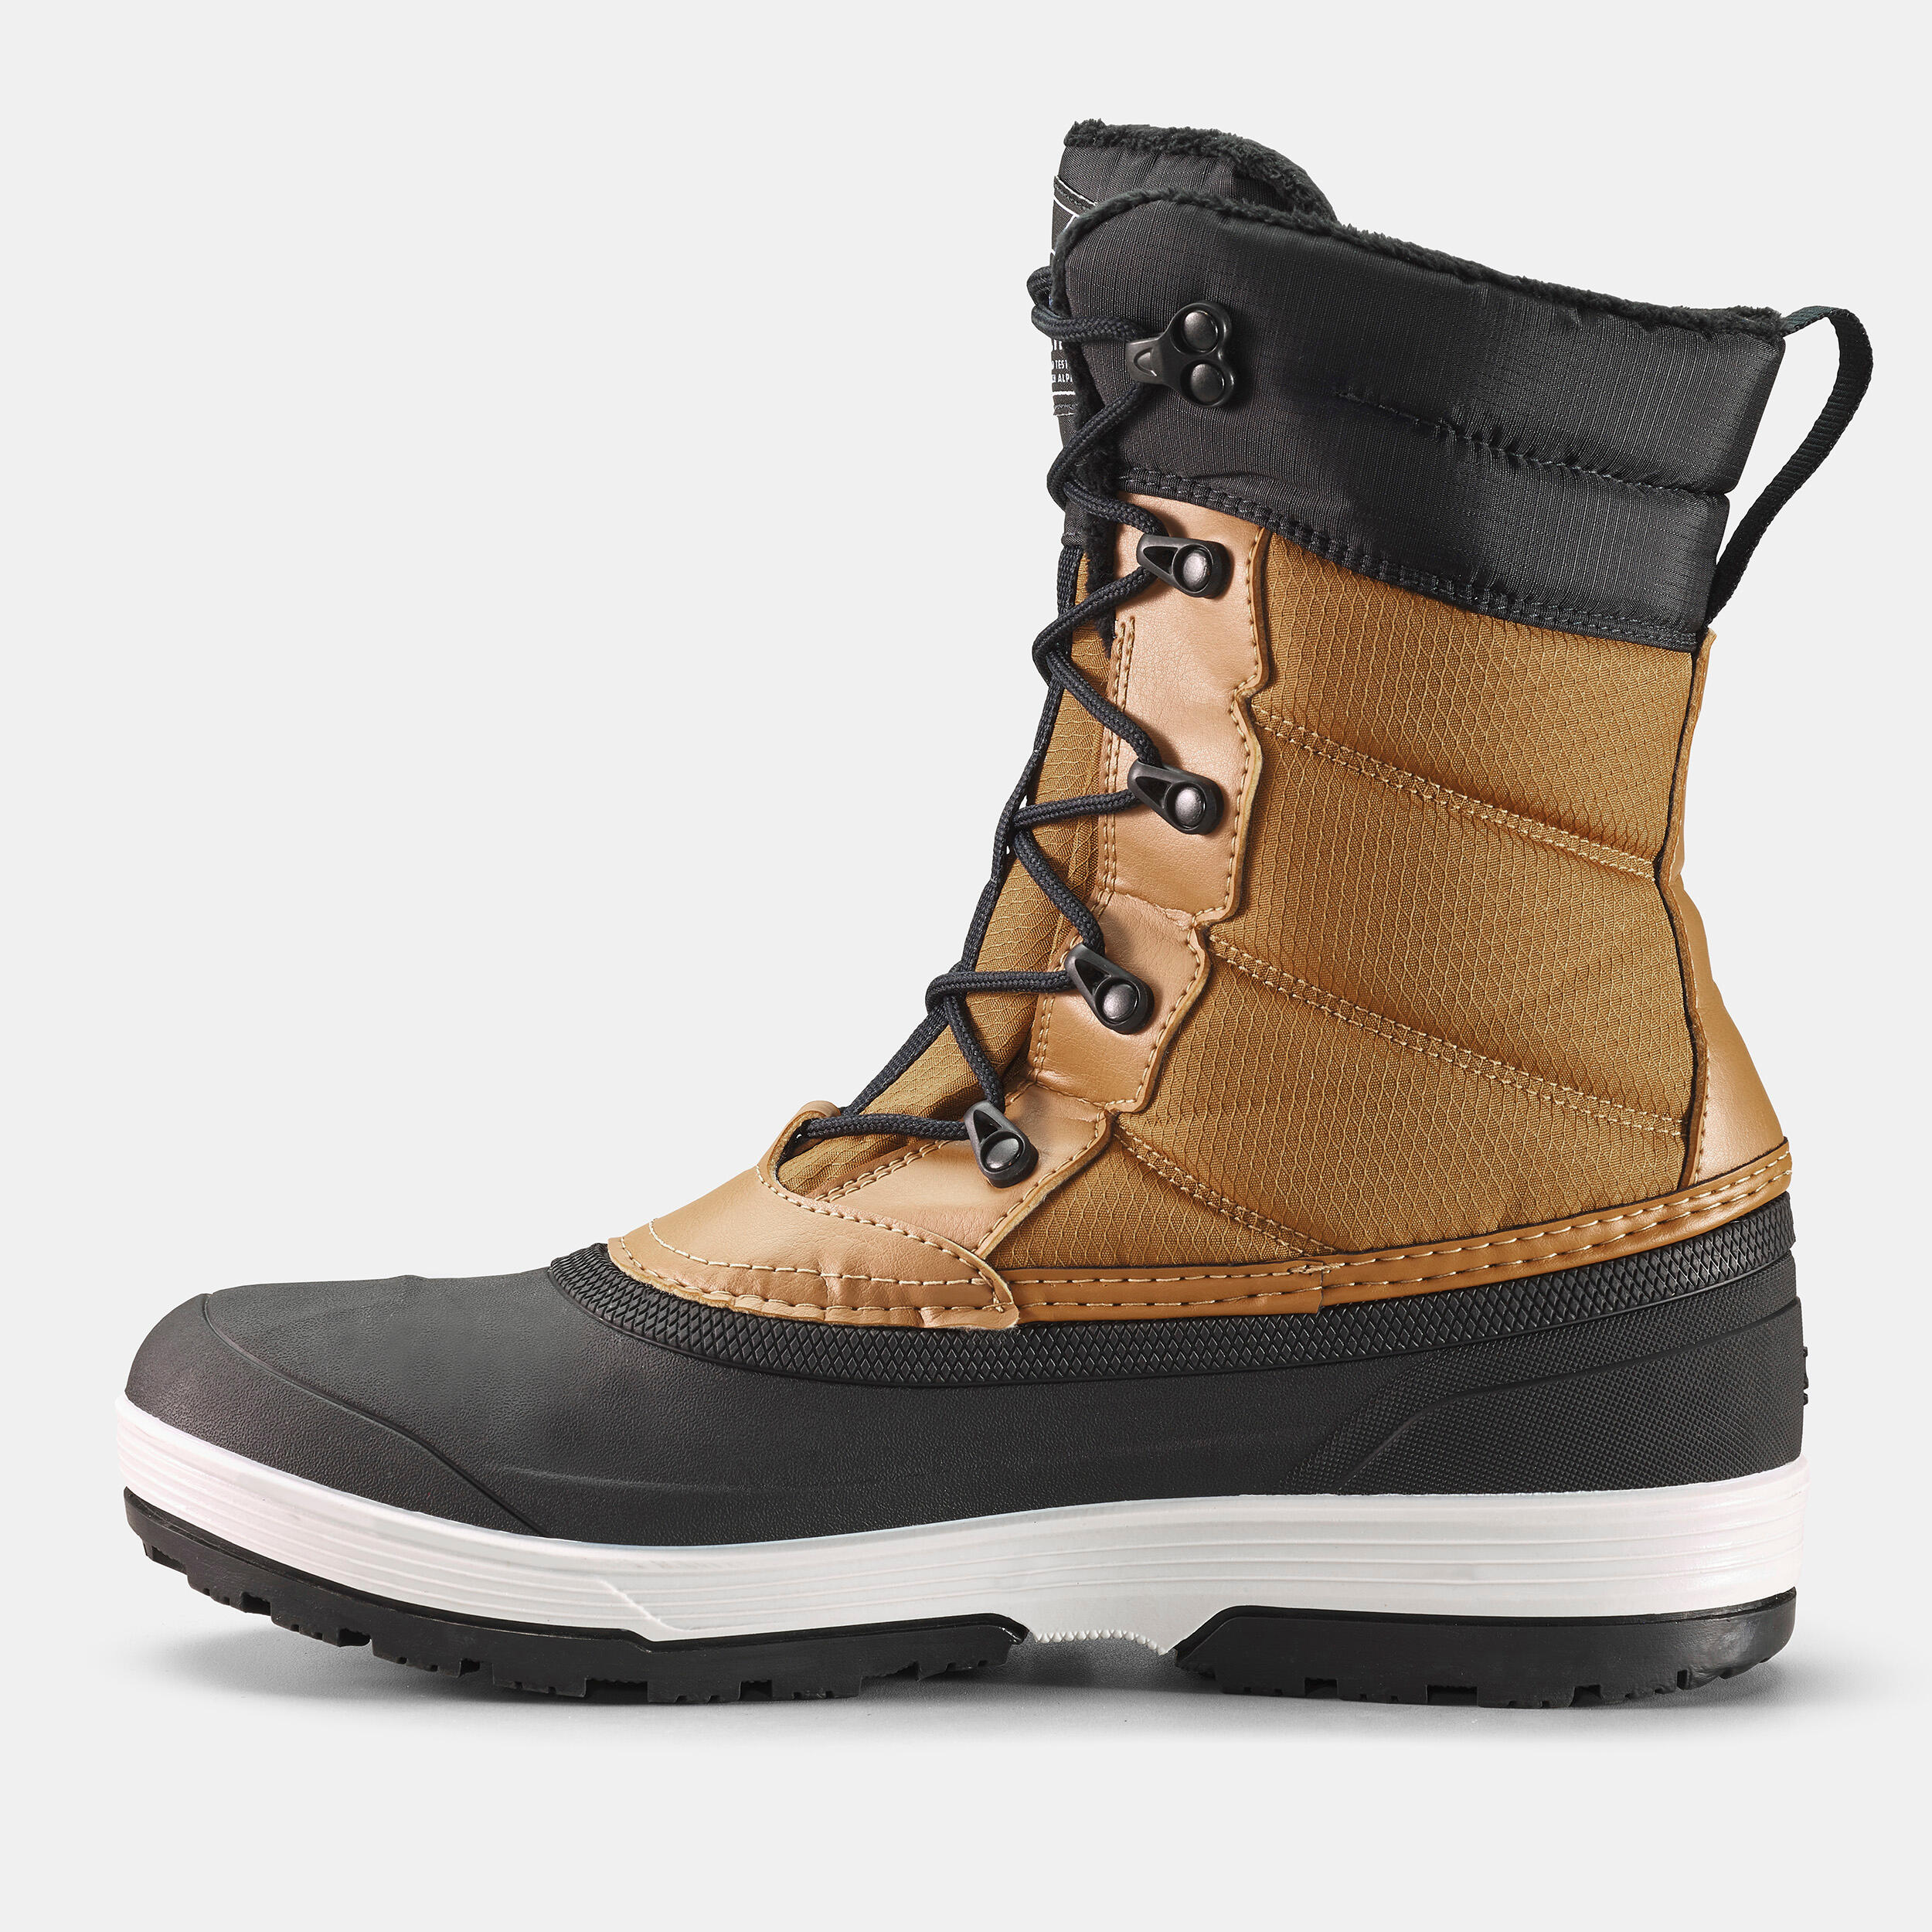 Warm Waterproof Snow Boots  - SH500 lace-up -  Men’s 5/9